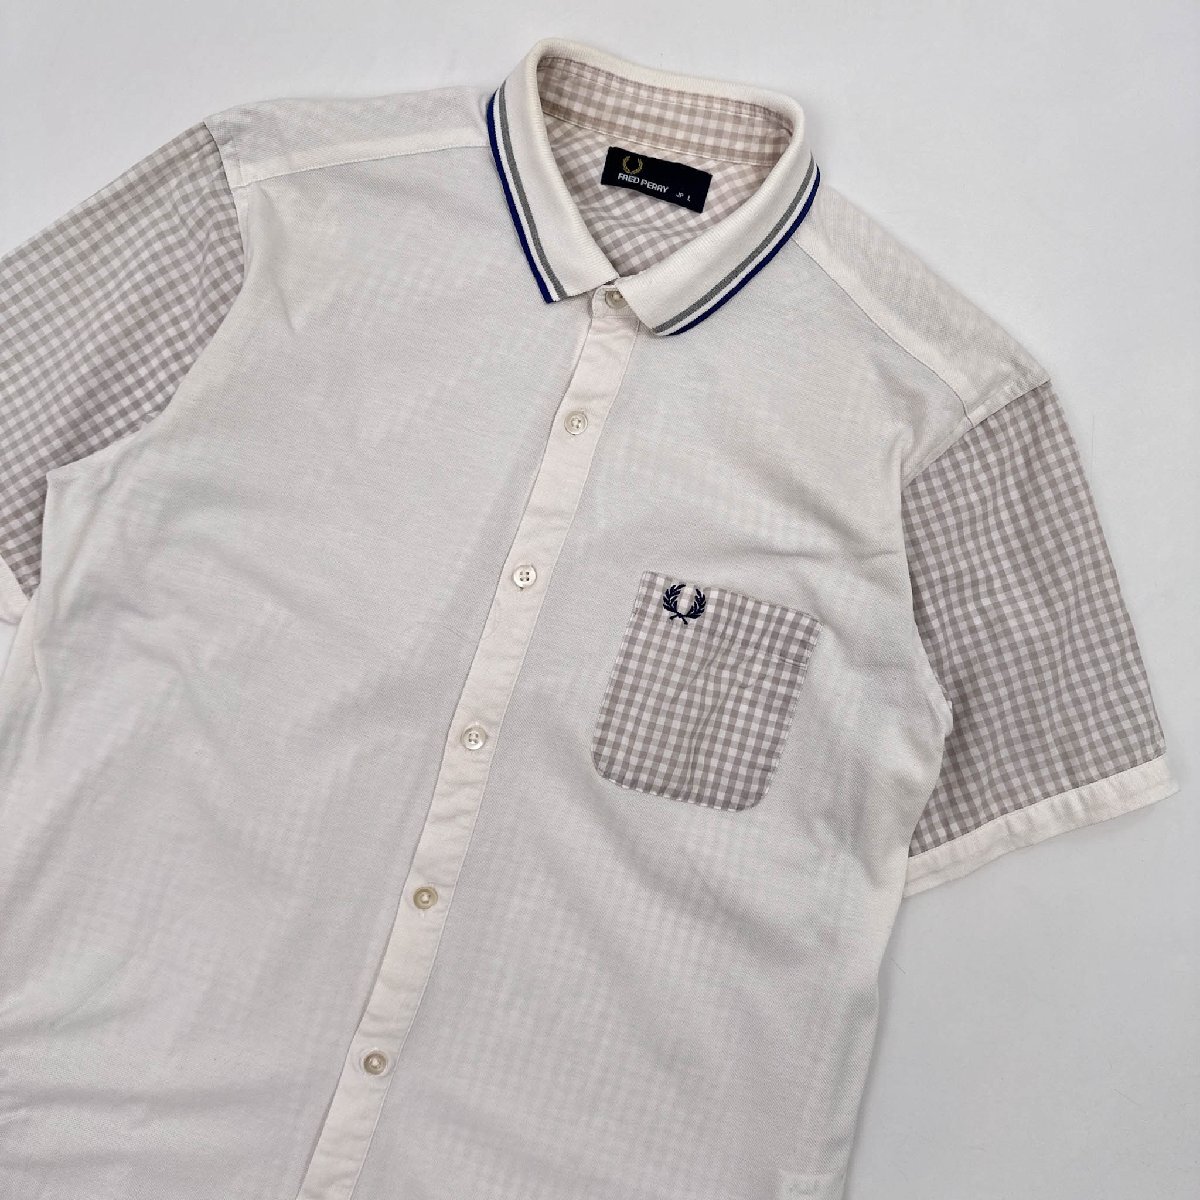 FRED PERRY フレッドペリー ギンガムチェック 切り替え 半袖シャツ サイズ L /ヒットユニオン/ホワイト×グレー/メンズの画像2